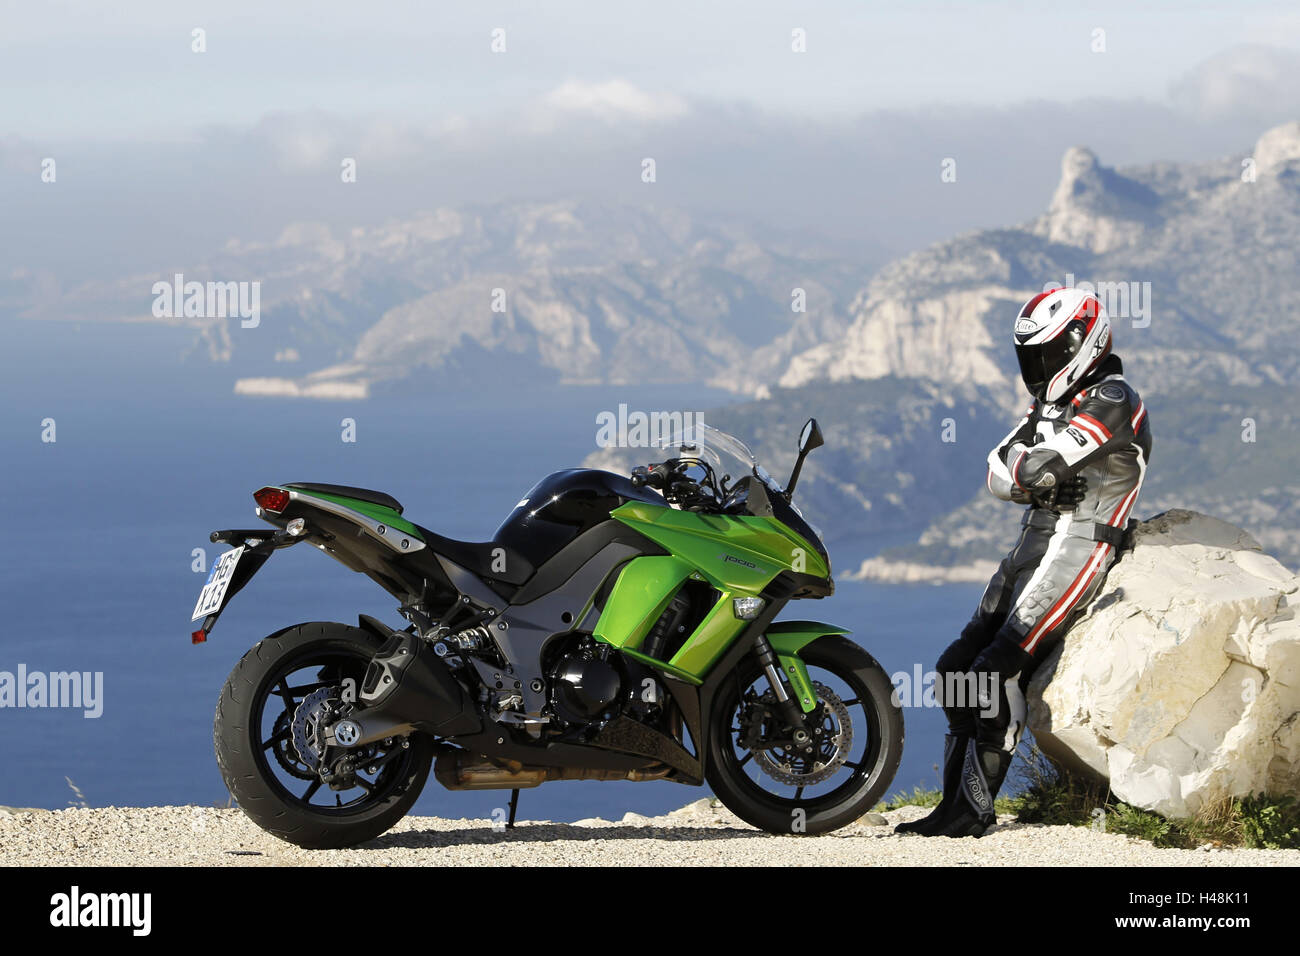 Motorcycle, Kawasaki Z 1000 SX, sports bike, coastal road, driver standing besides, Mediterranean landscape in the background, Stock Photo